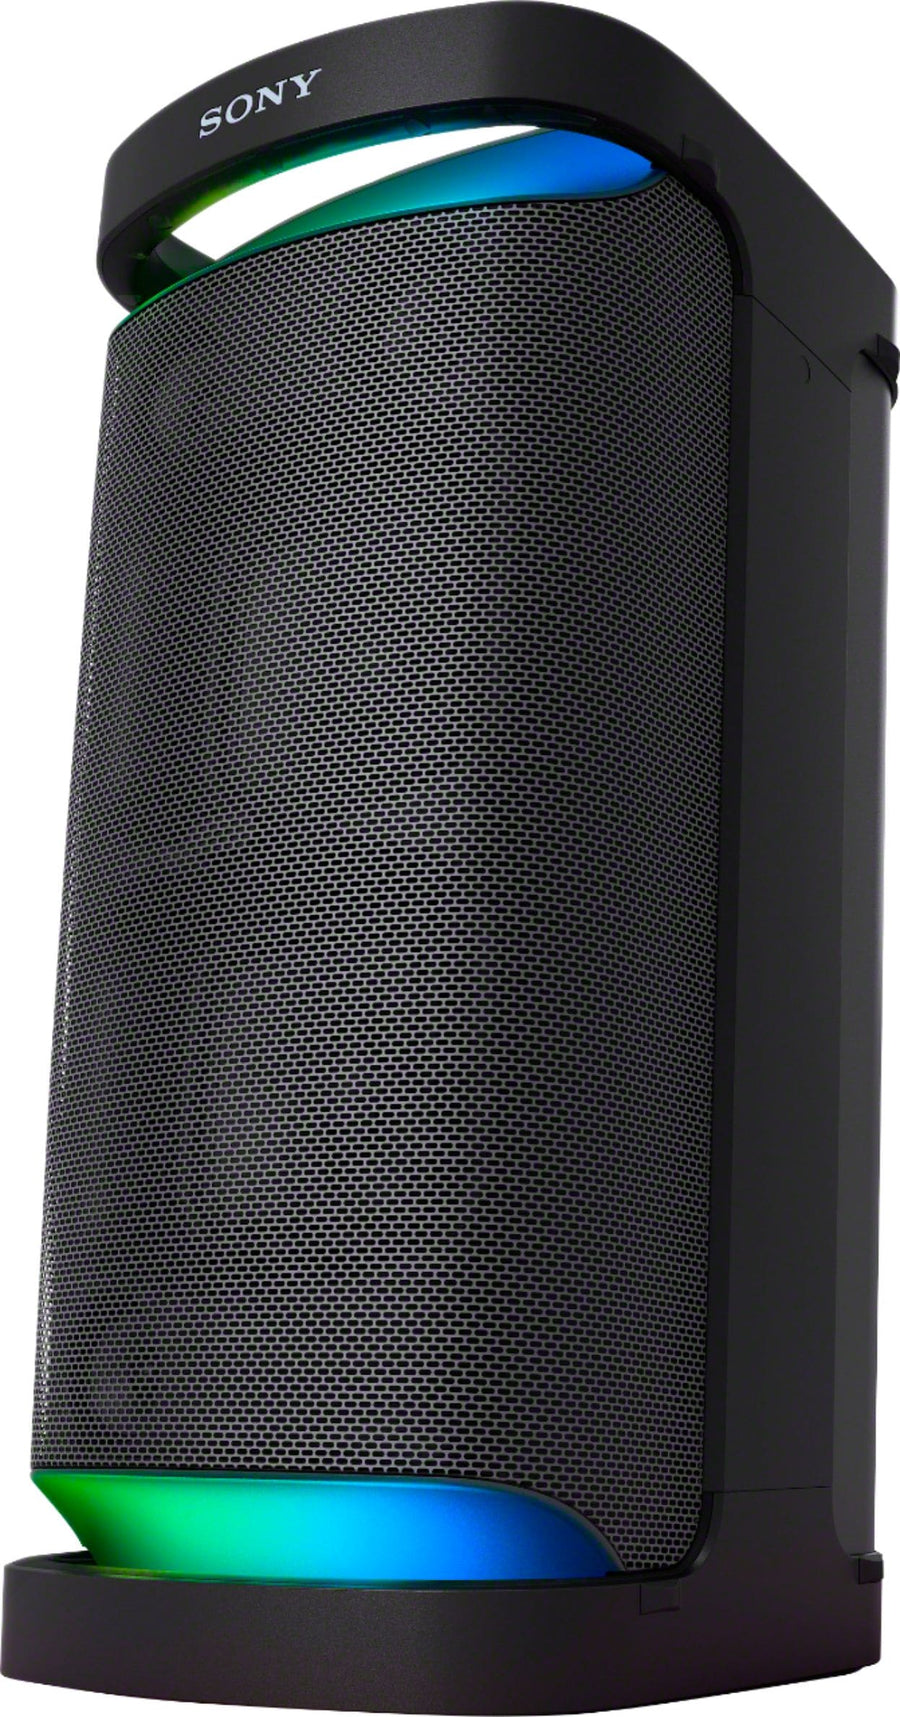 Sony - Portable Bluetooth Speaker - Black_0